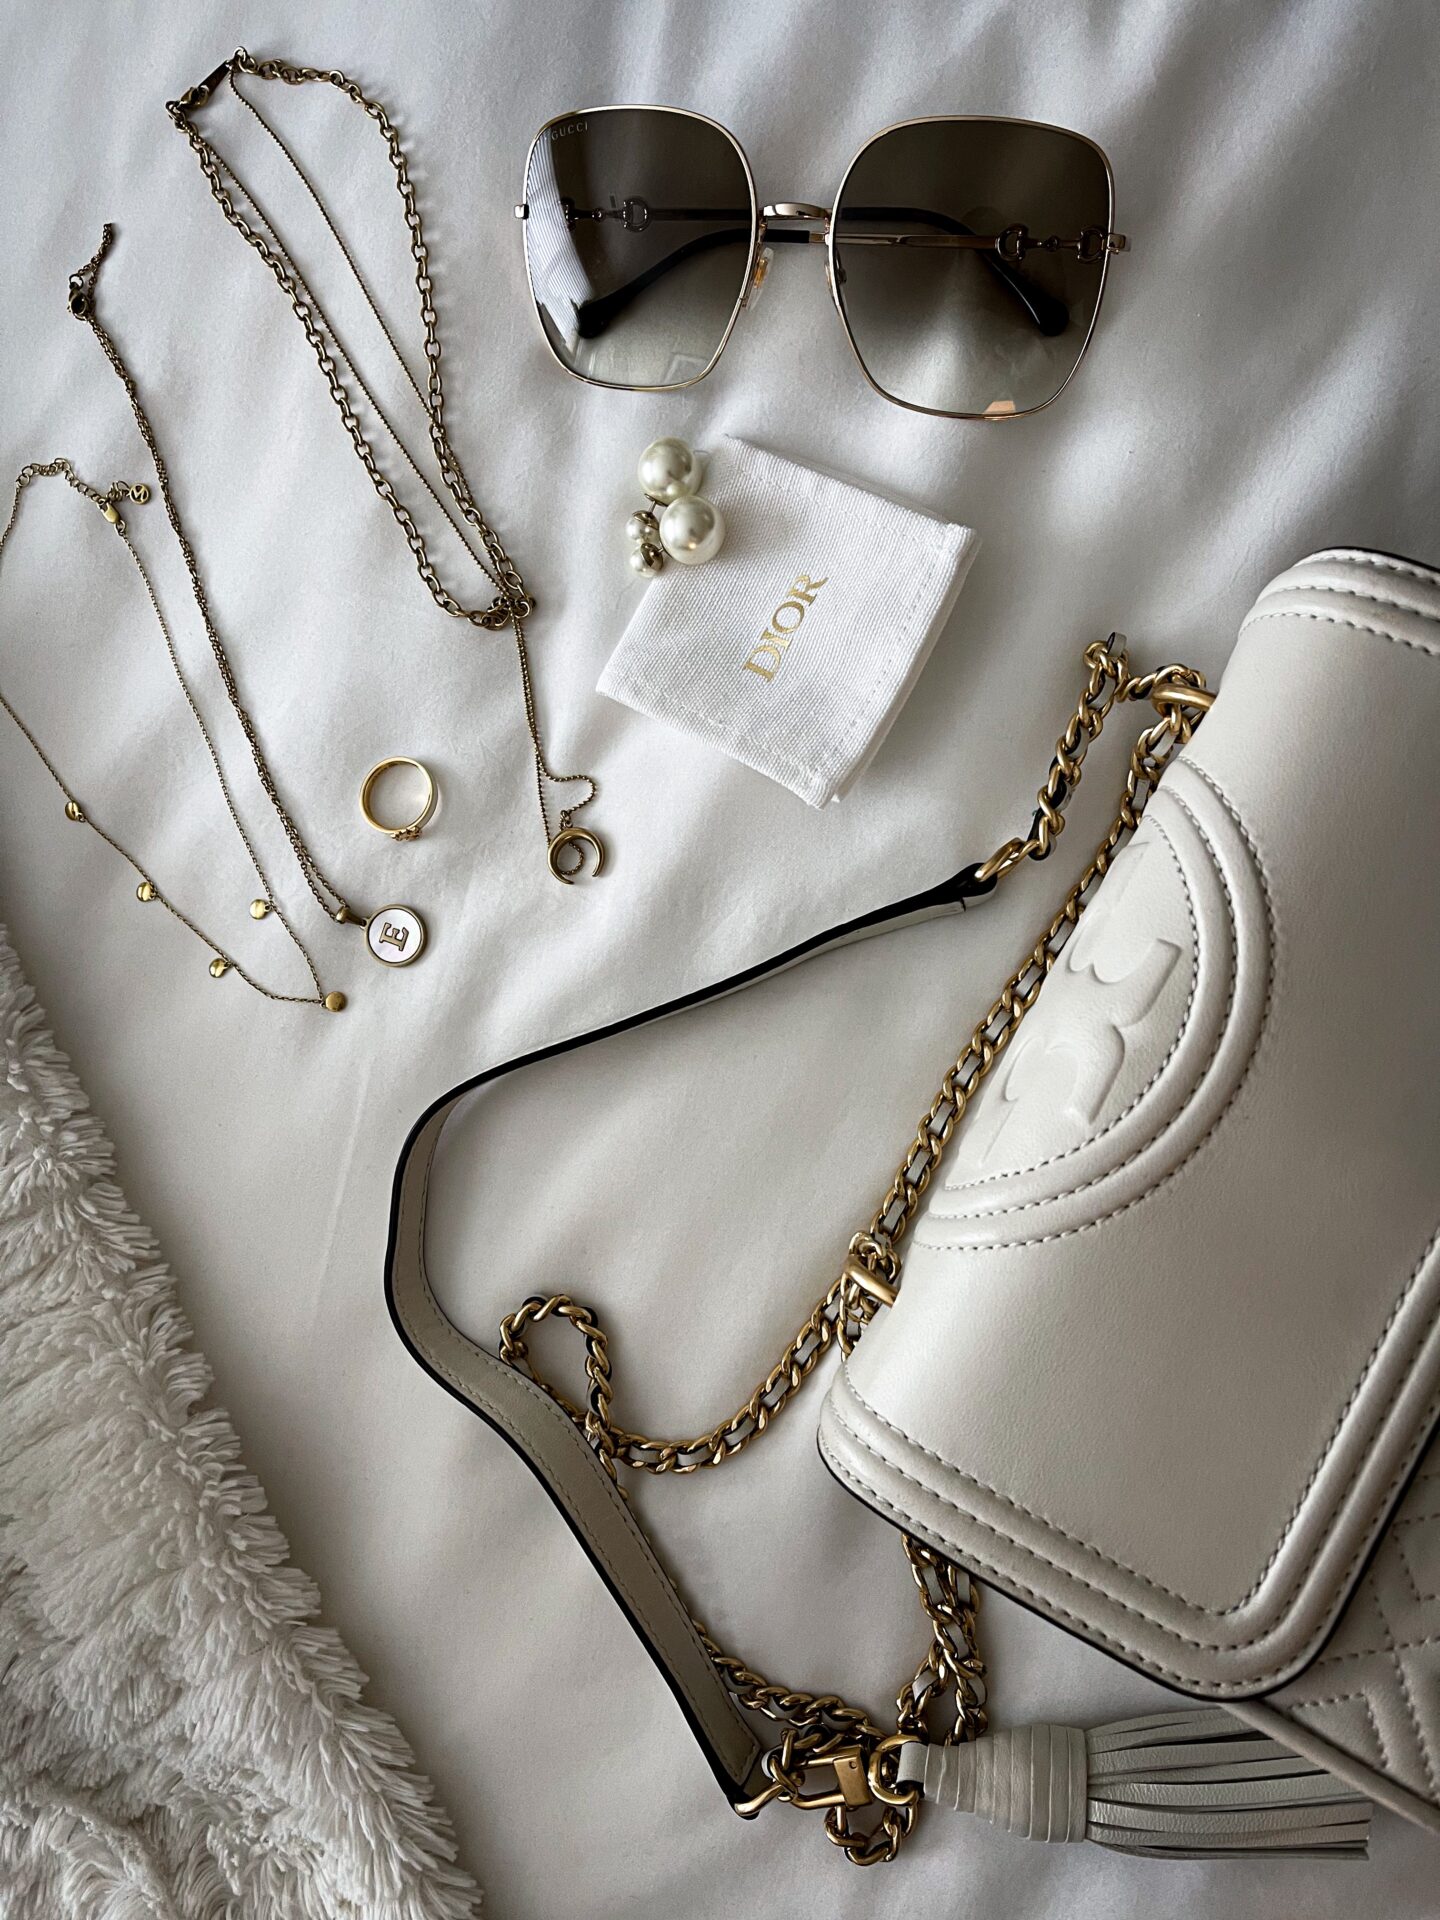 Cream and gold accessories